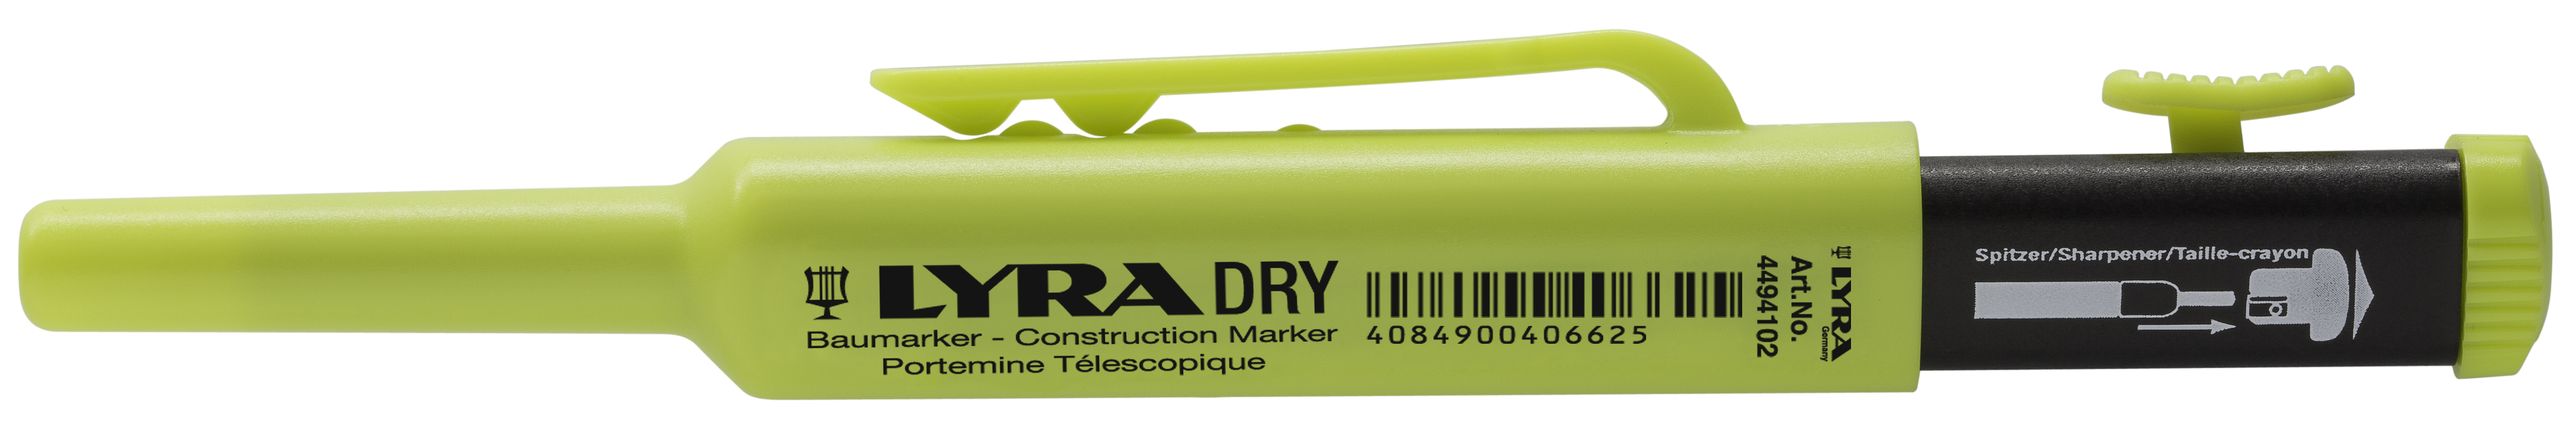 TRIUSO Baumarker Lyra-Dry Graphit 2B Spezialcl. Köcherschoner